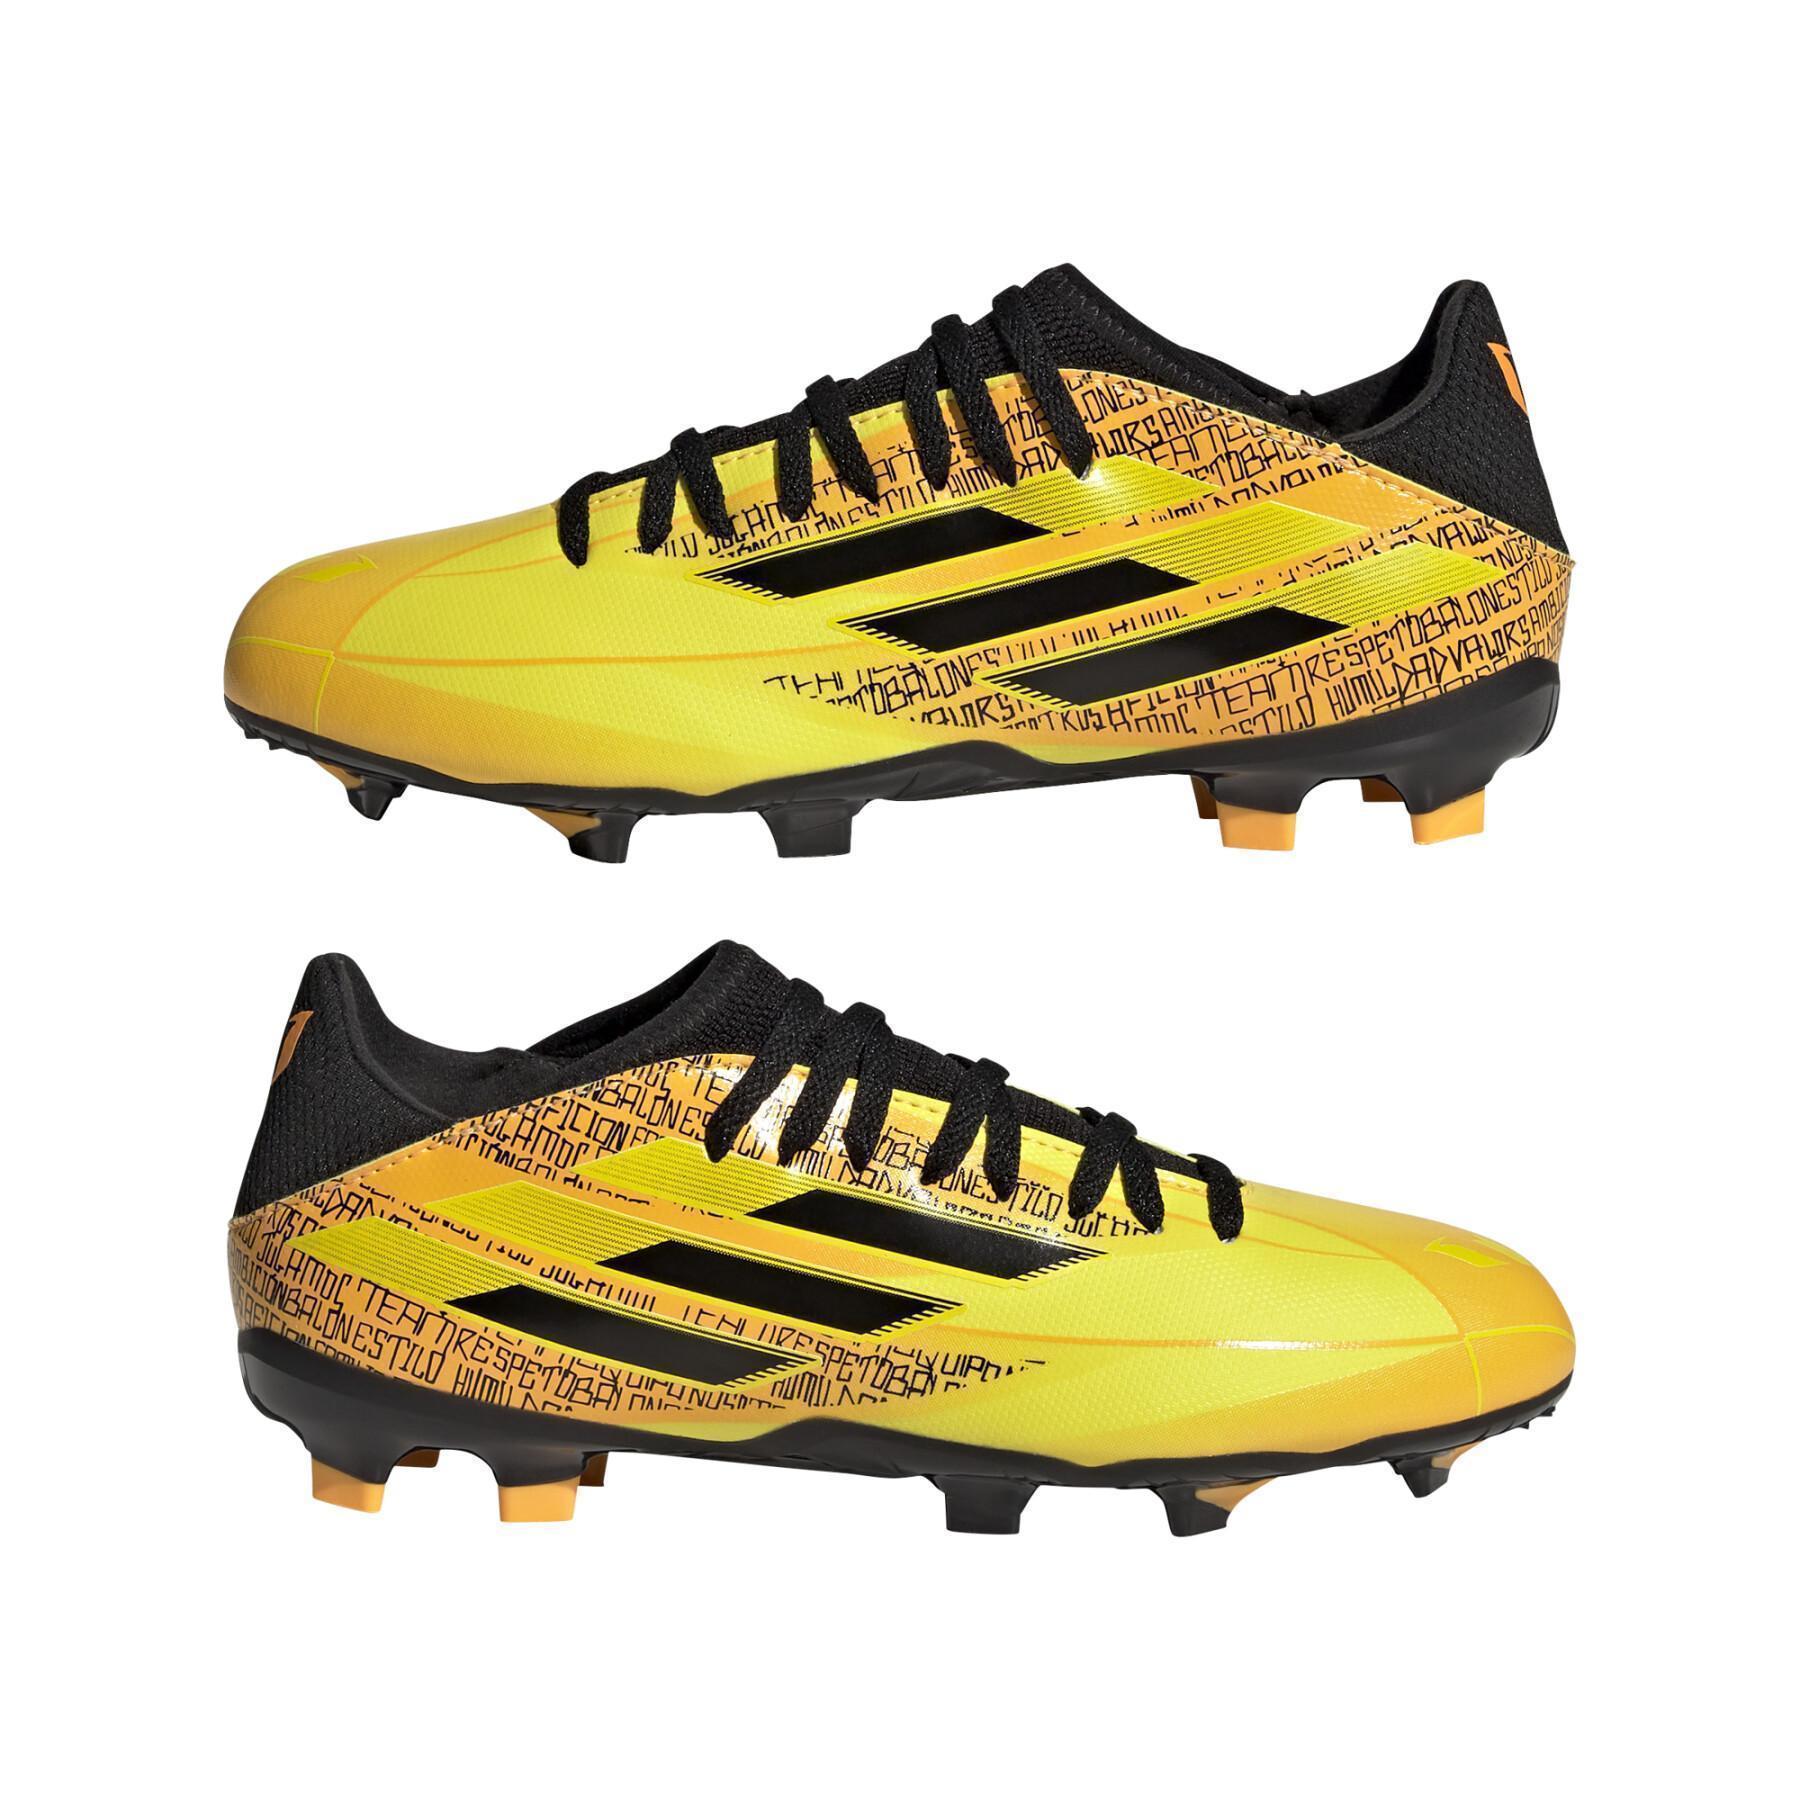 Children's soccer shoes adidas X Speedflow Messi.3 FG